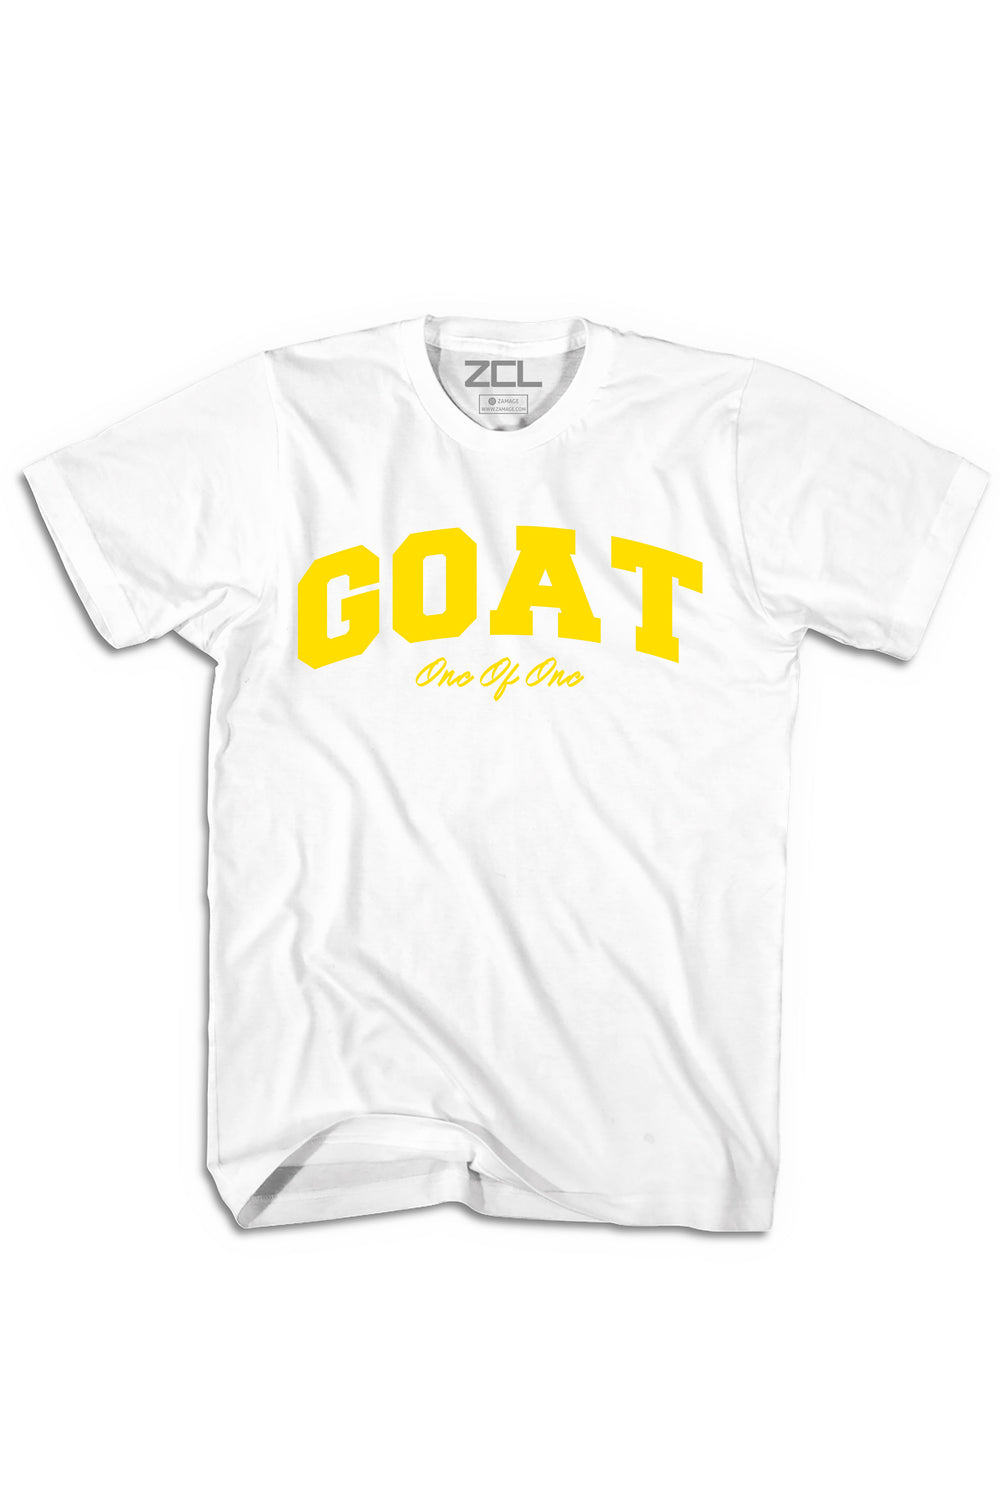 Goat Tee (Yellow Logo) - Zamage